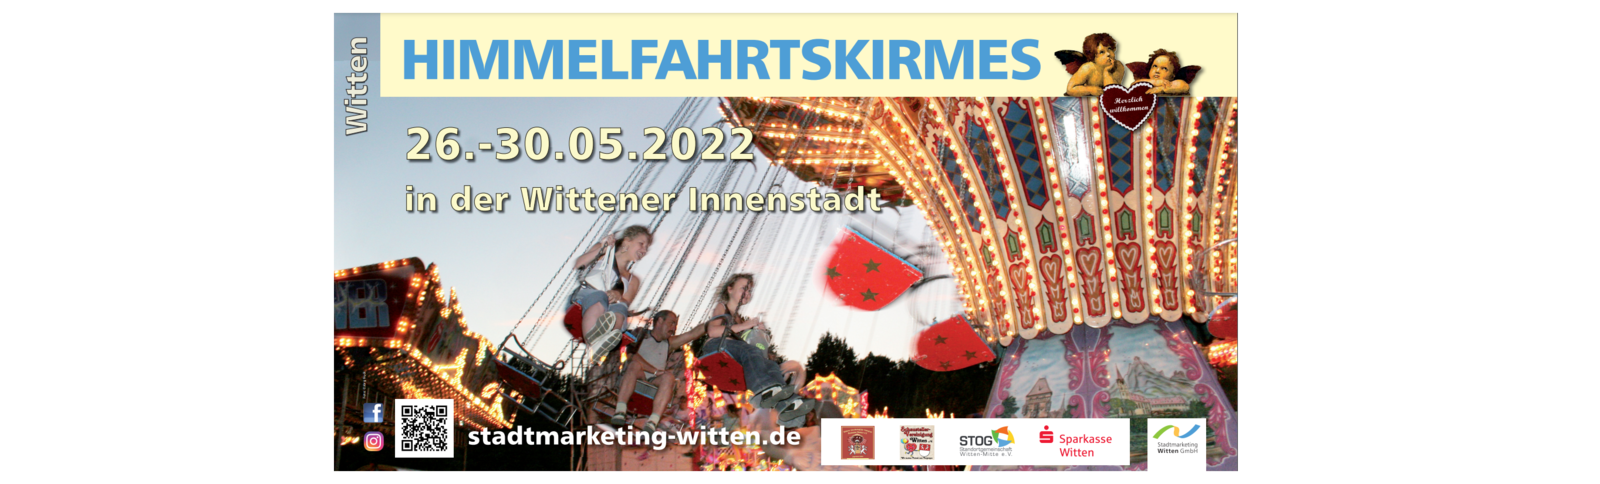 Banner Himmelfahrtskirmes.png